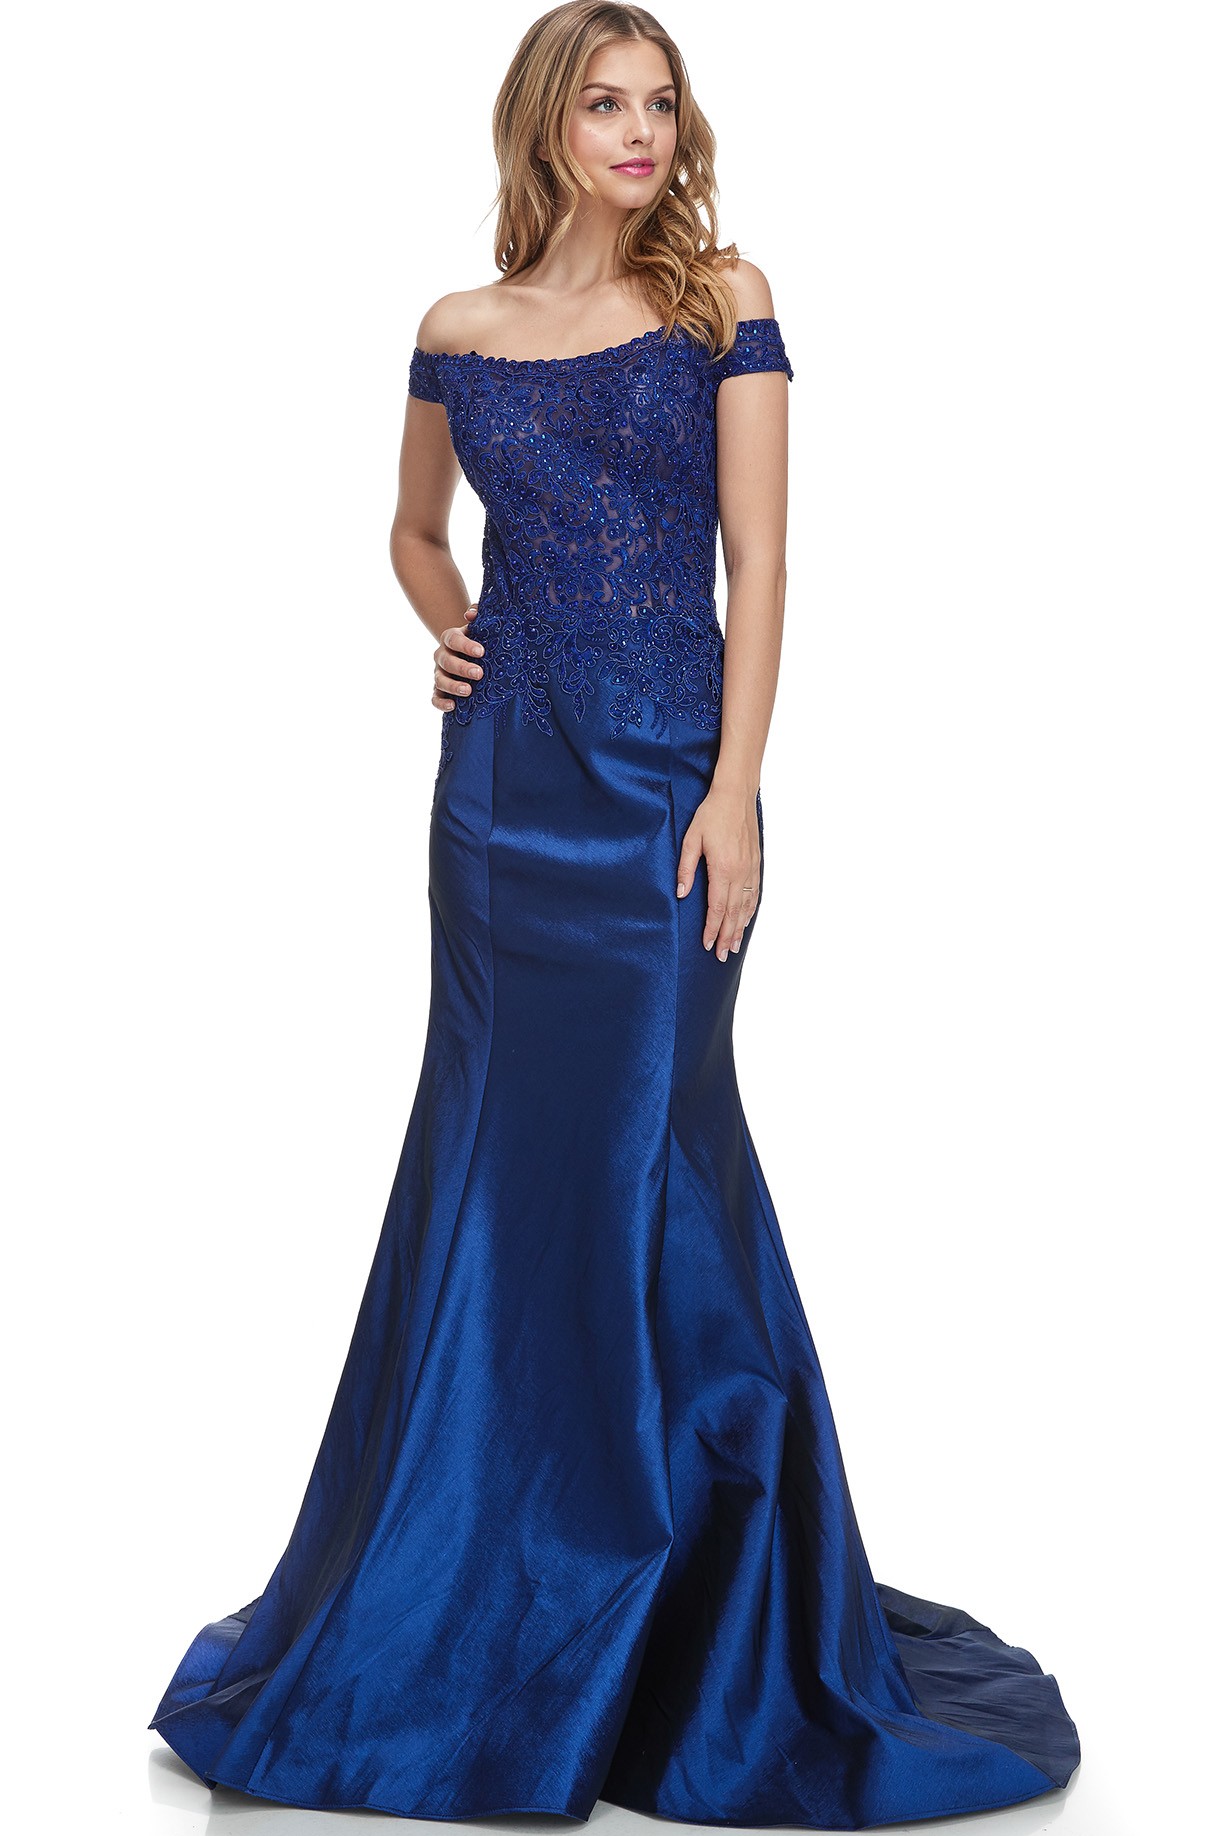 Venda - PS6054 Vestido Longo Azul Royal